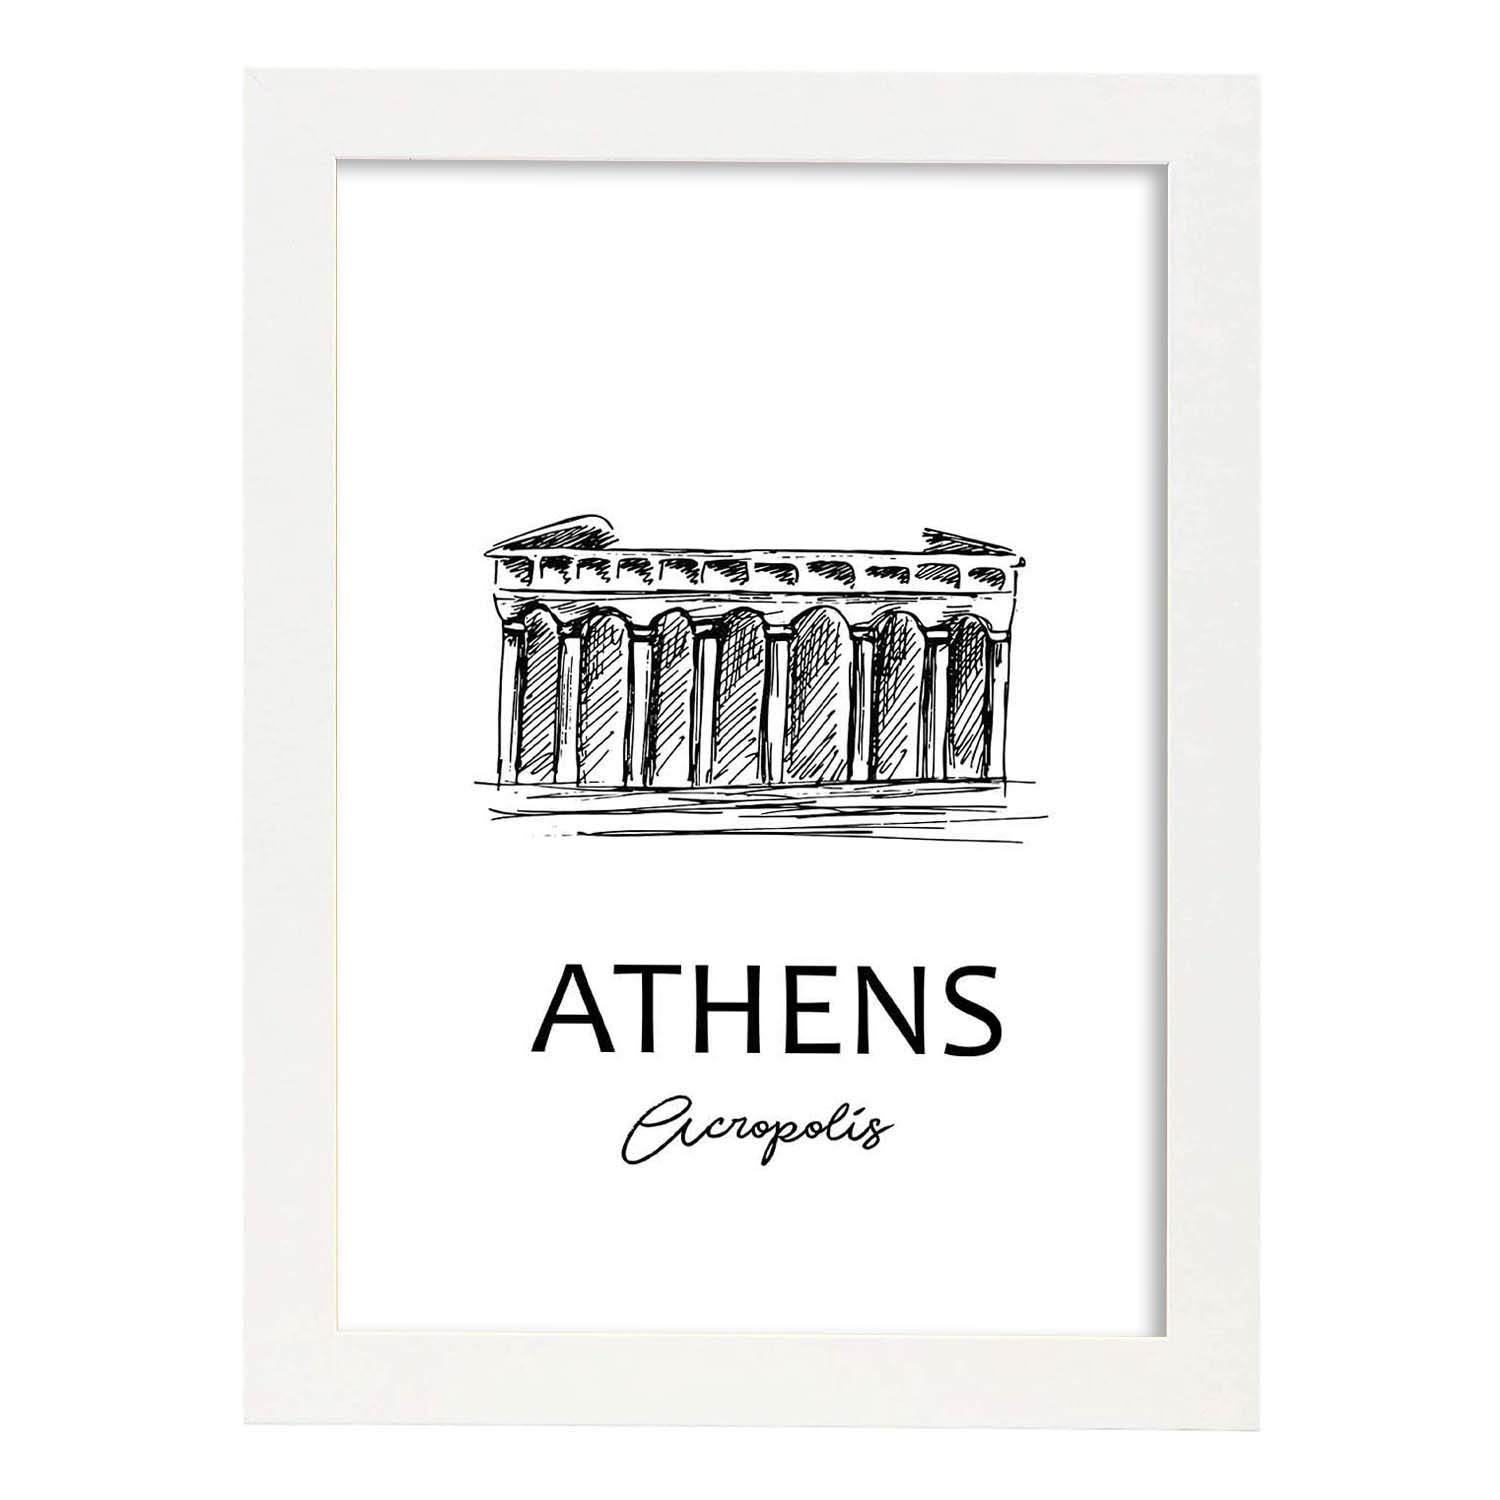 Poster de Atenas - Acropolis. Láminas con monumentos de ciudades.-Artwork-Nacnic-A4-Marco Blanco-Nacnic Estudio SL